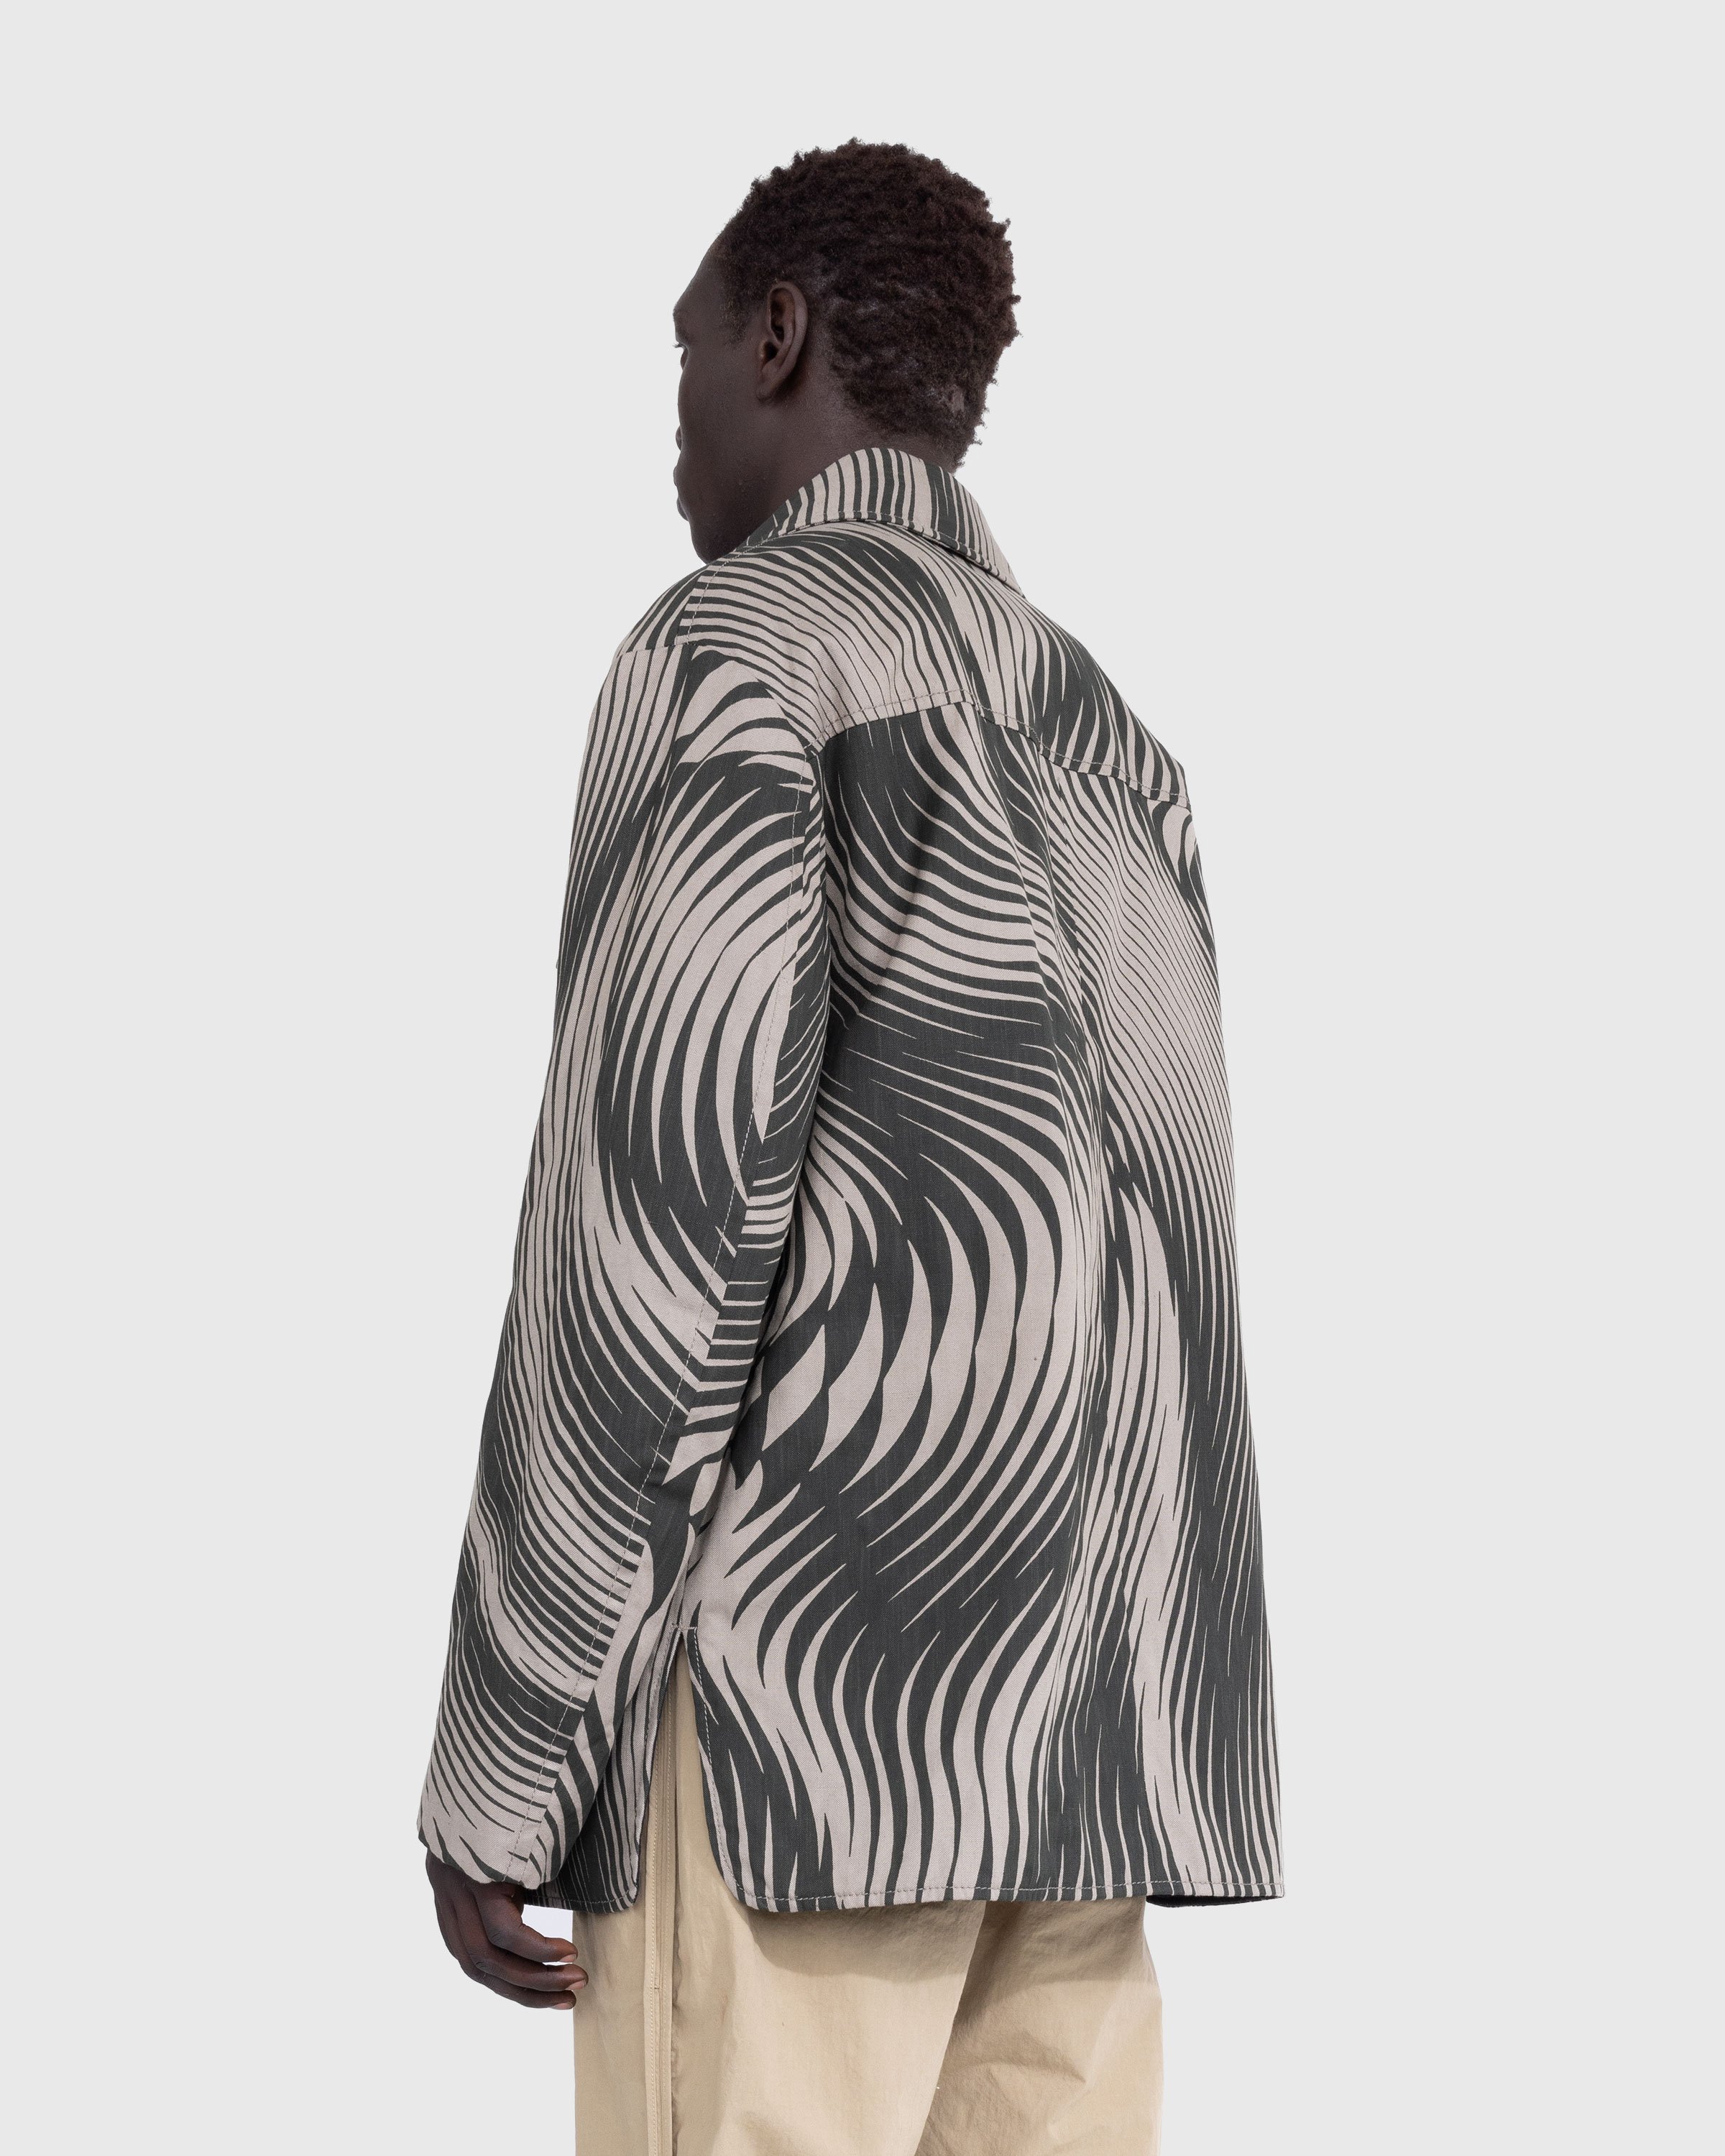 Dries van Noten - Valko Jacket Anthracite - Clothing - Grey - Image 5